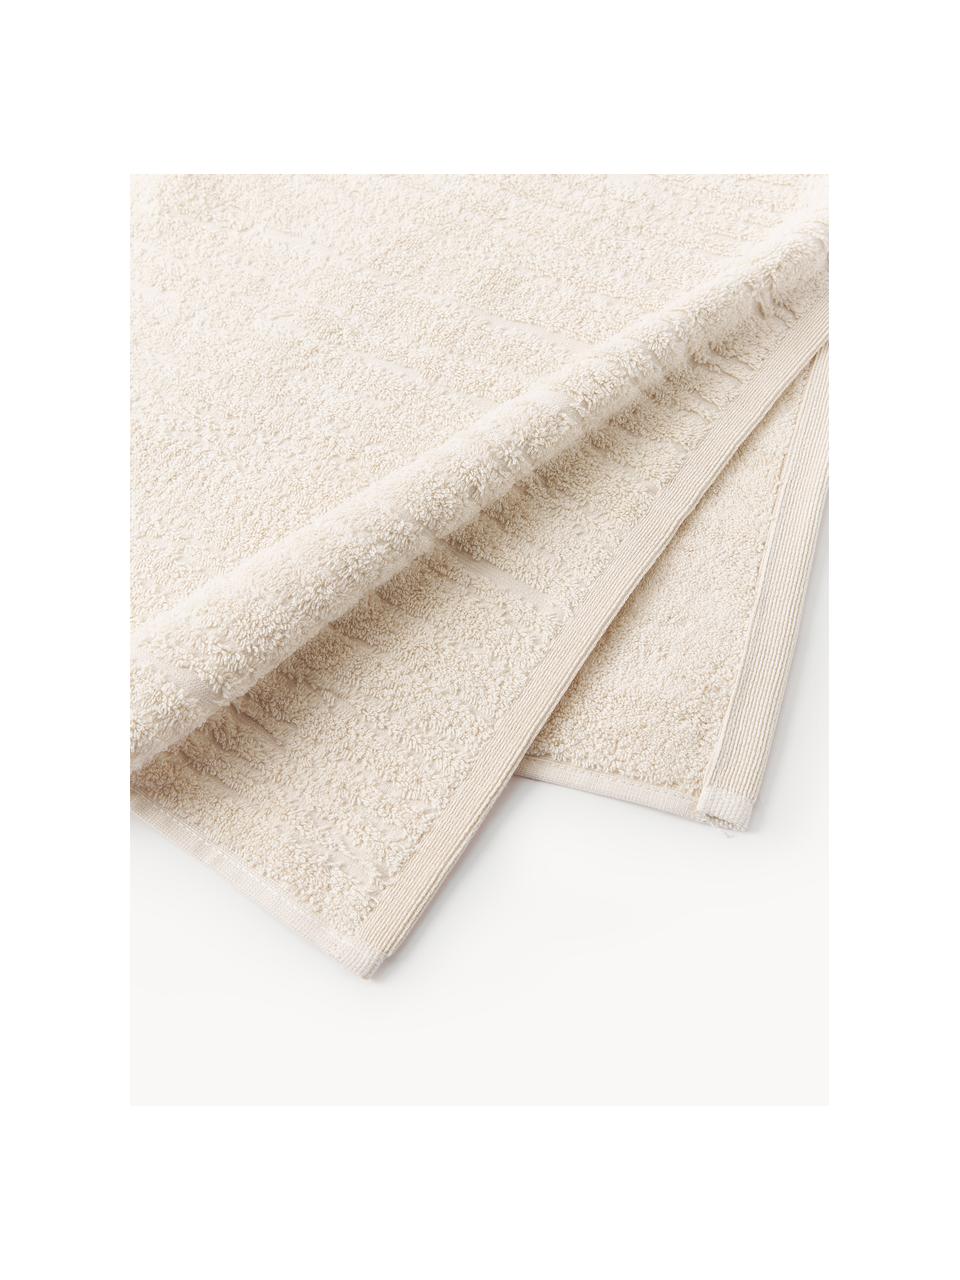 Set di asciugamani in cotone Audrina, in varie misure, Beige chiaro, Set in varie misure